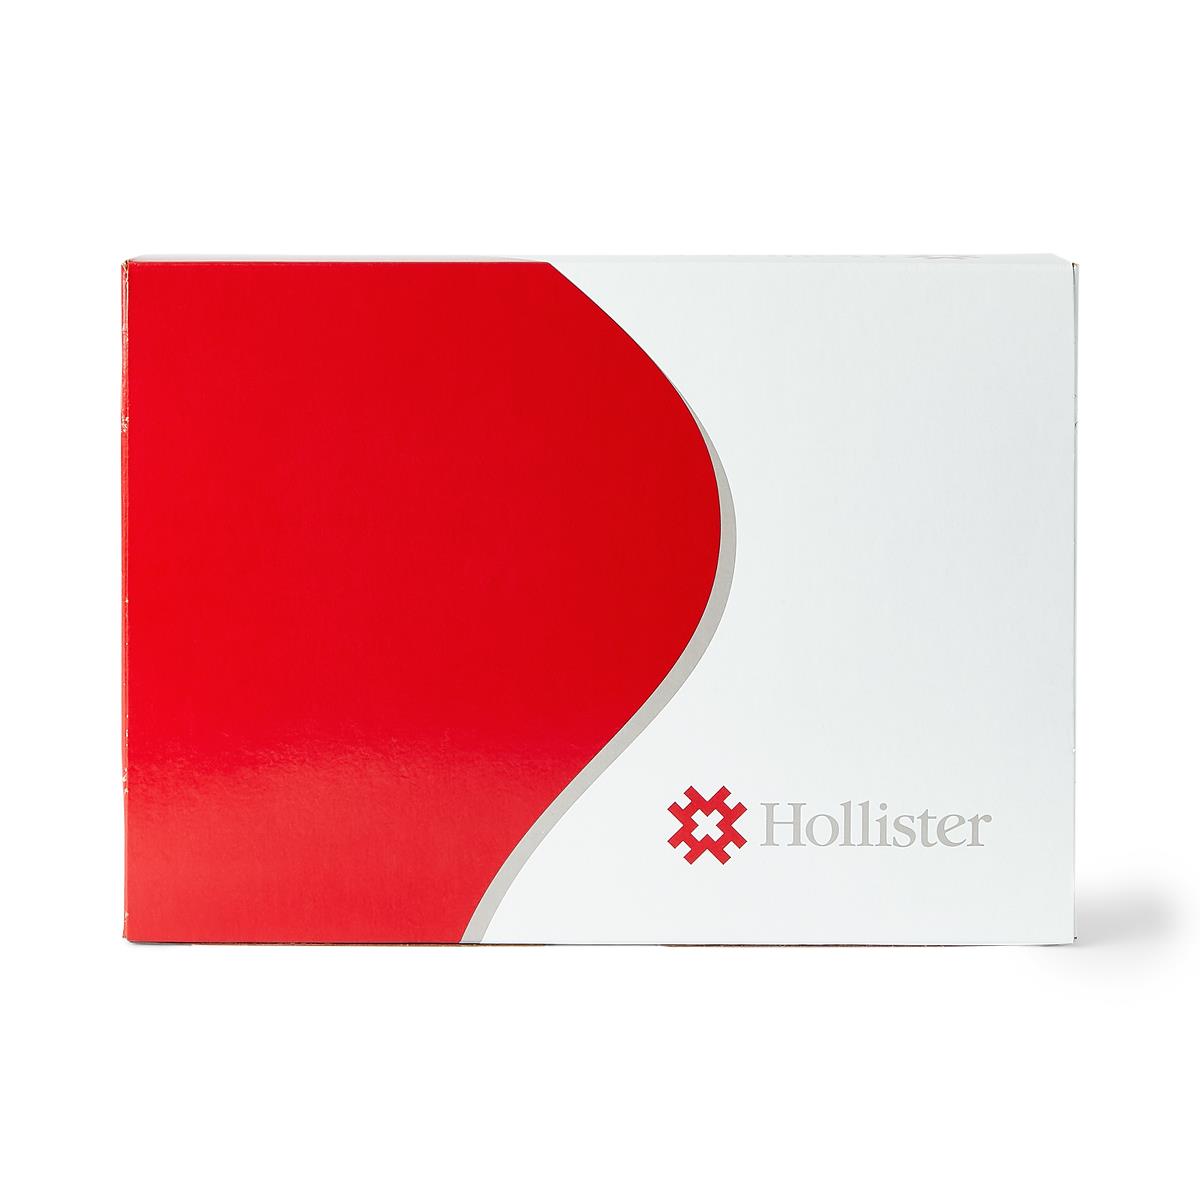 Hollister 8954 CeraPlus Premier™ One Piece Kits - Box of 5